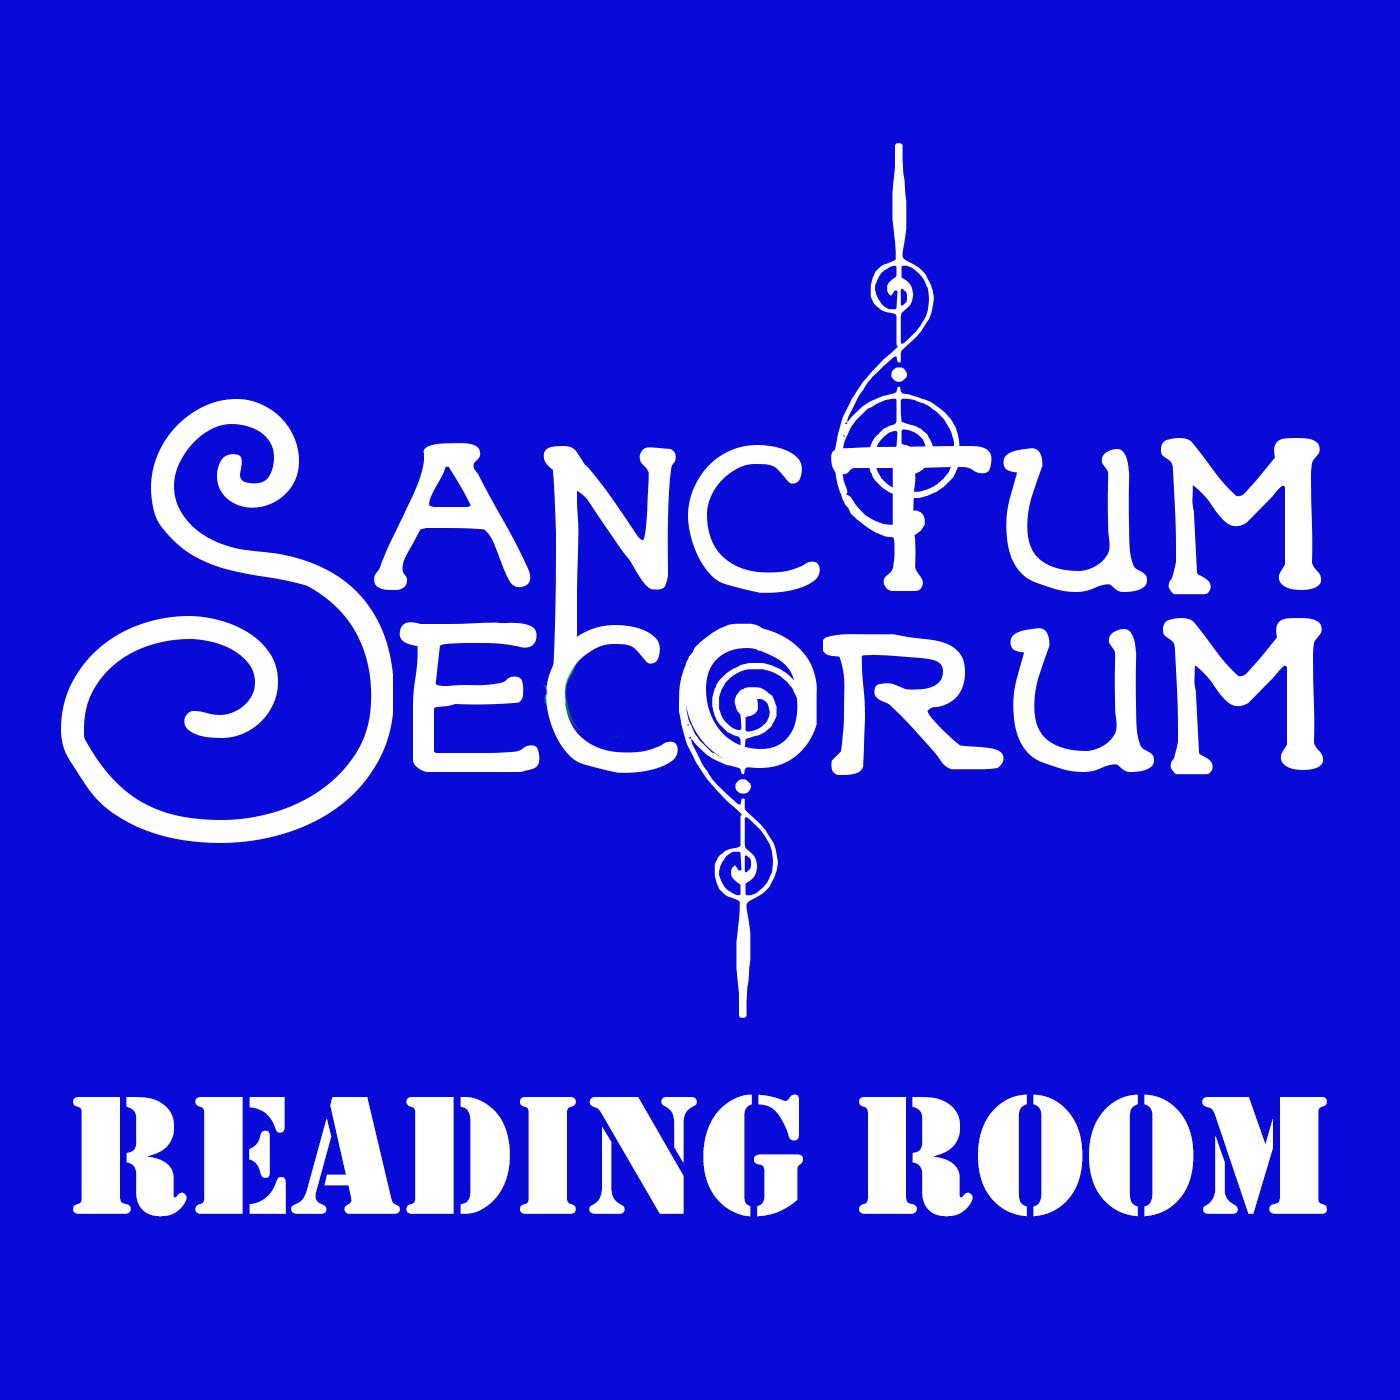 Sanctum Secorum Reading Room #12 - The House on the Borderland